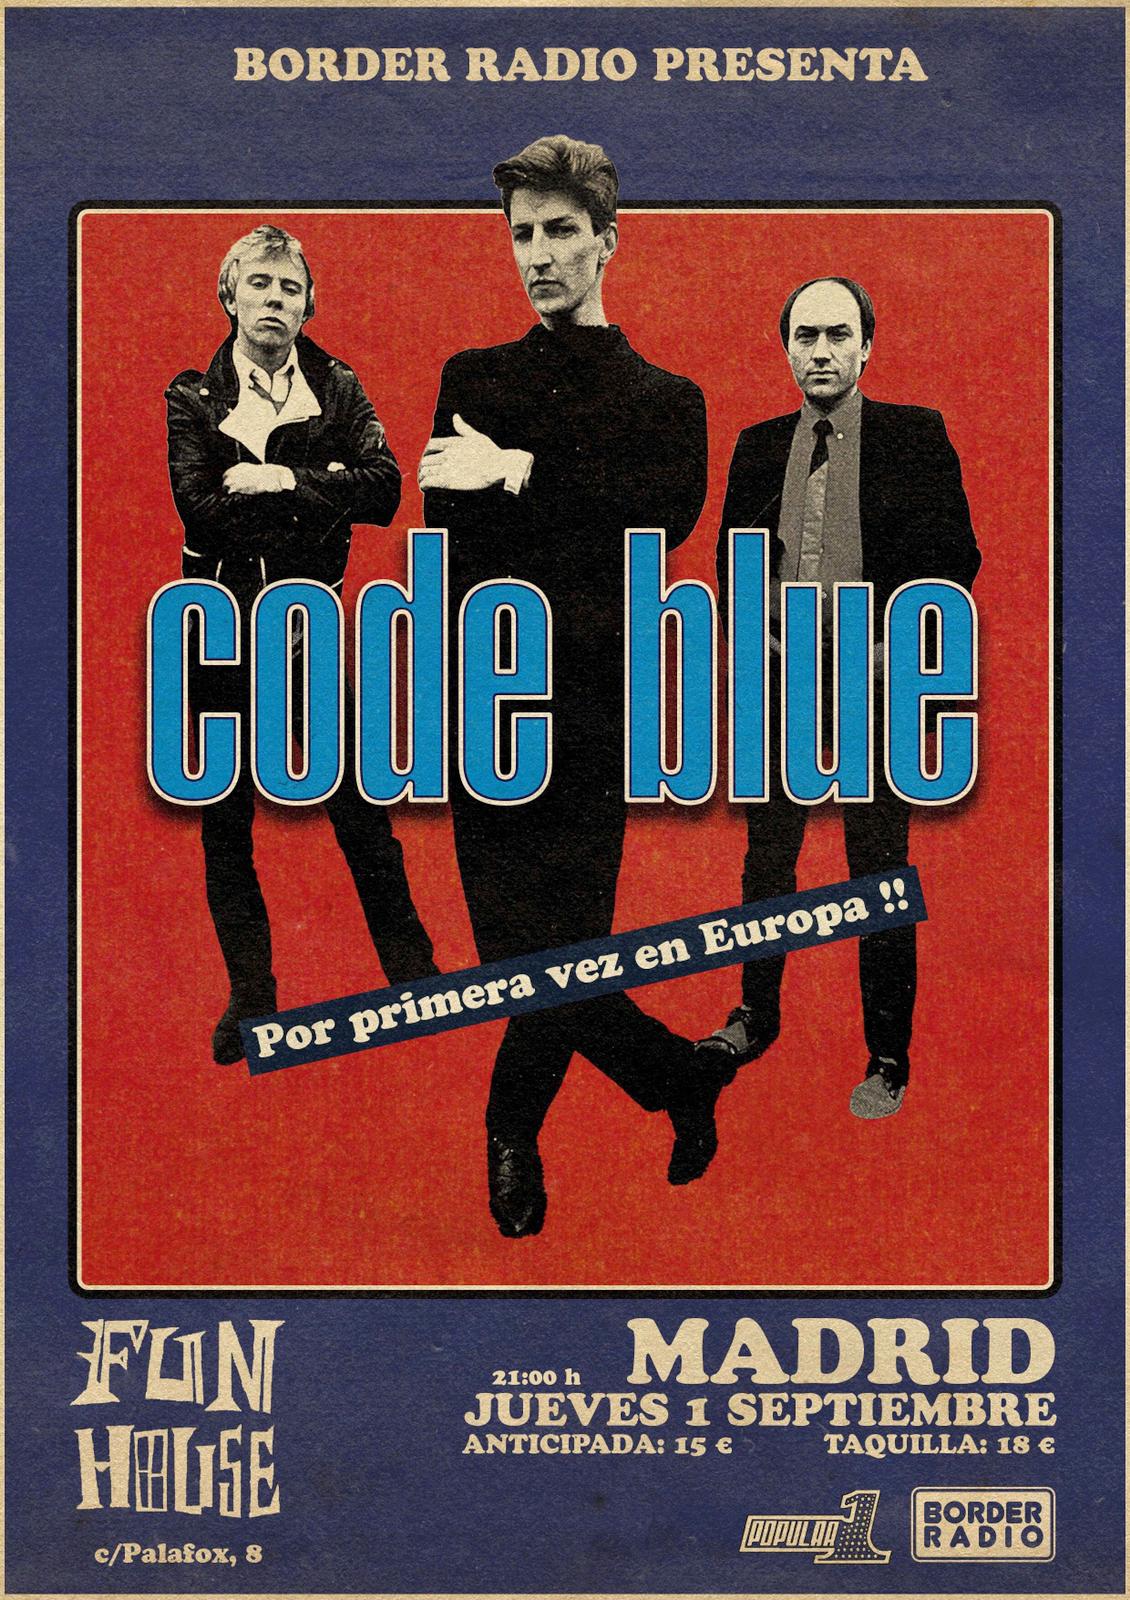 CODE BLUE (USA) en Madrid - Mutick